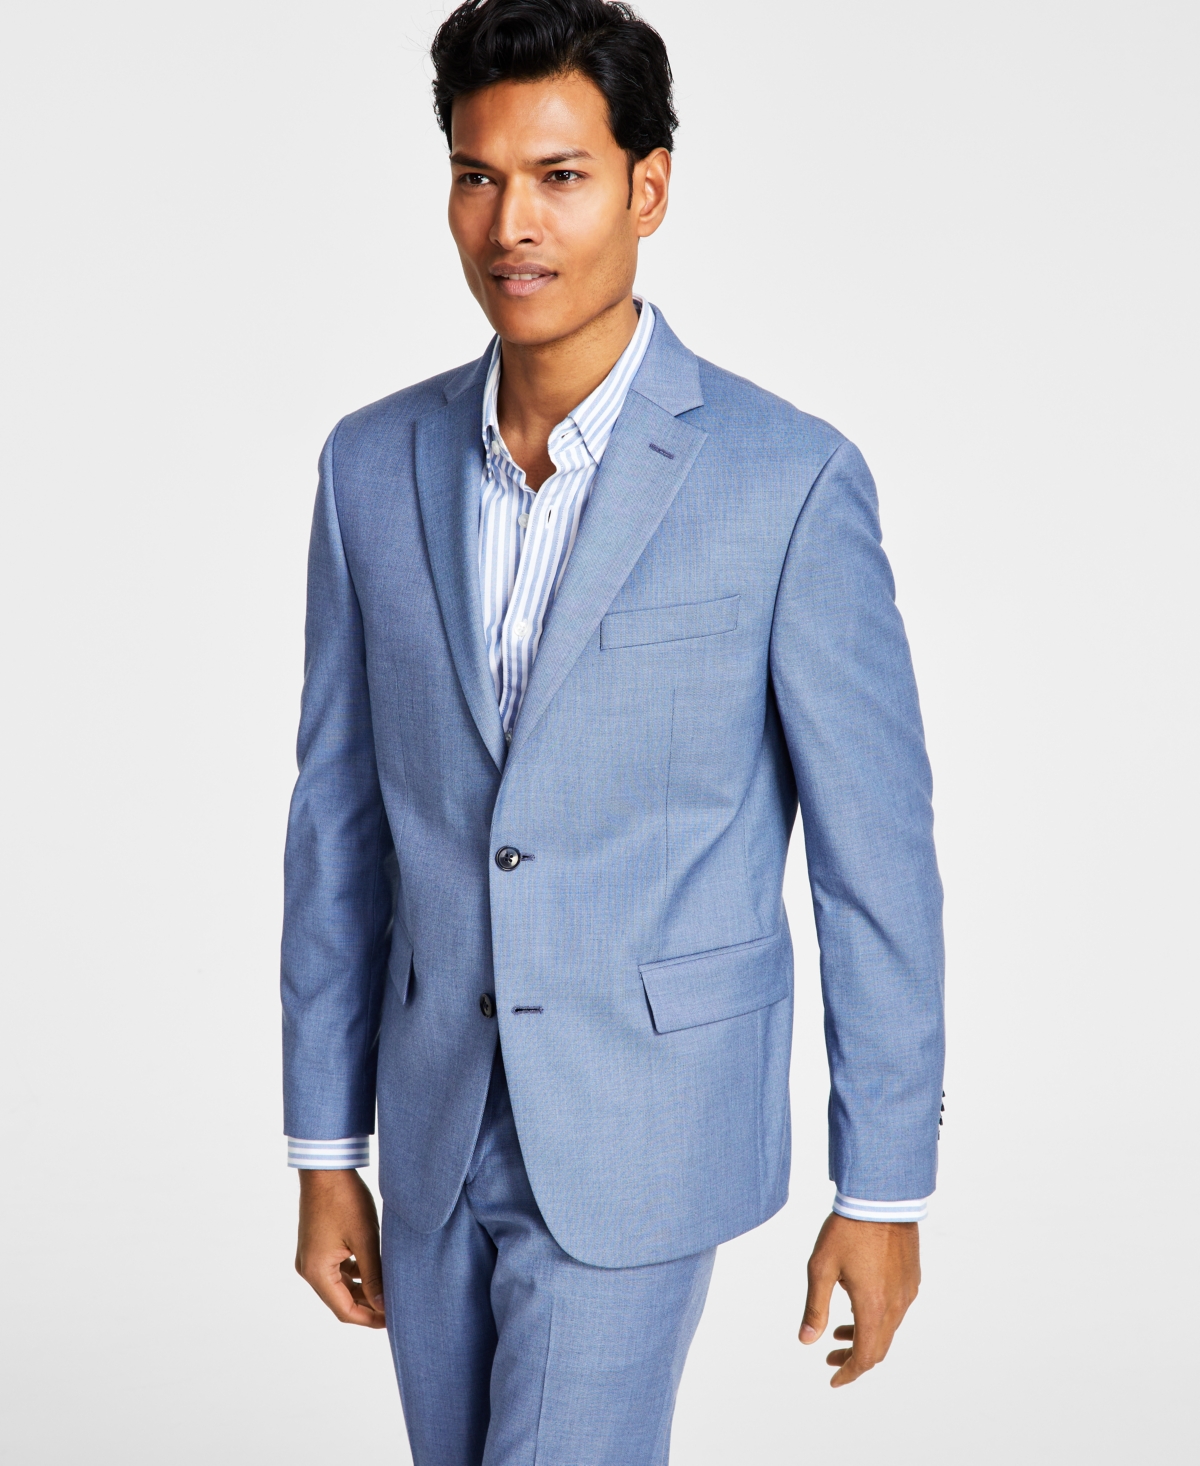 Men's Skinny-Fit Stretch Suit Jacket - Grey/white Pinstripe